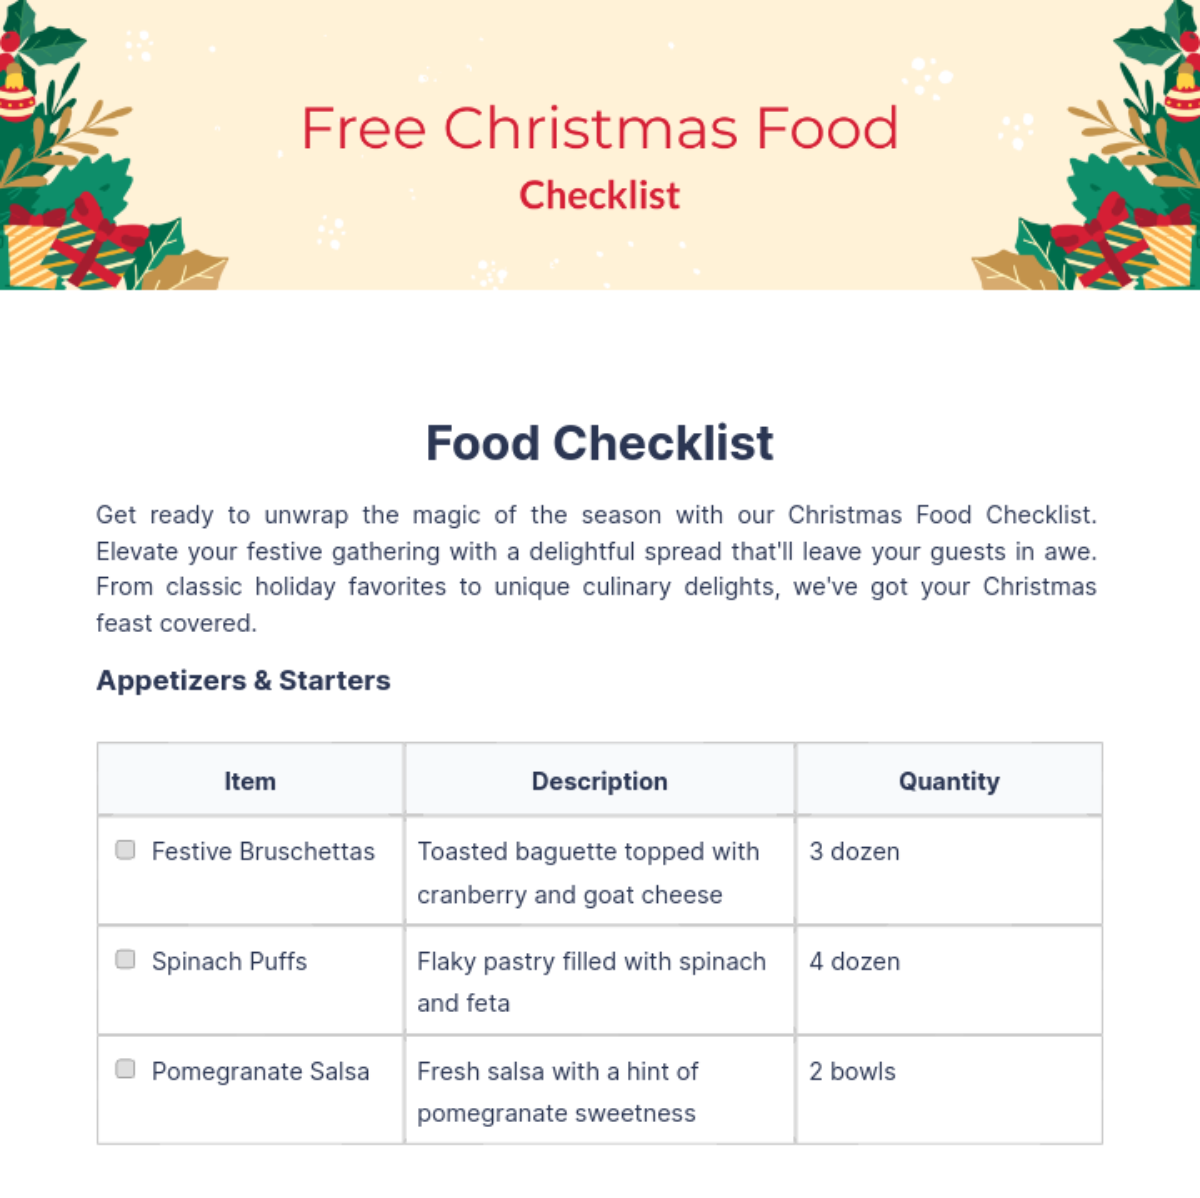 Free Christmas Food Checklist Template